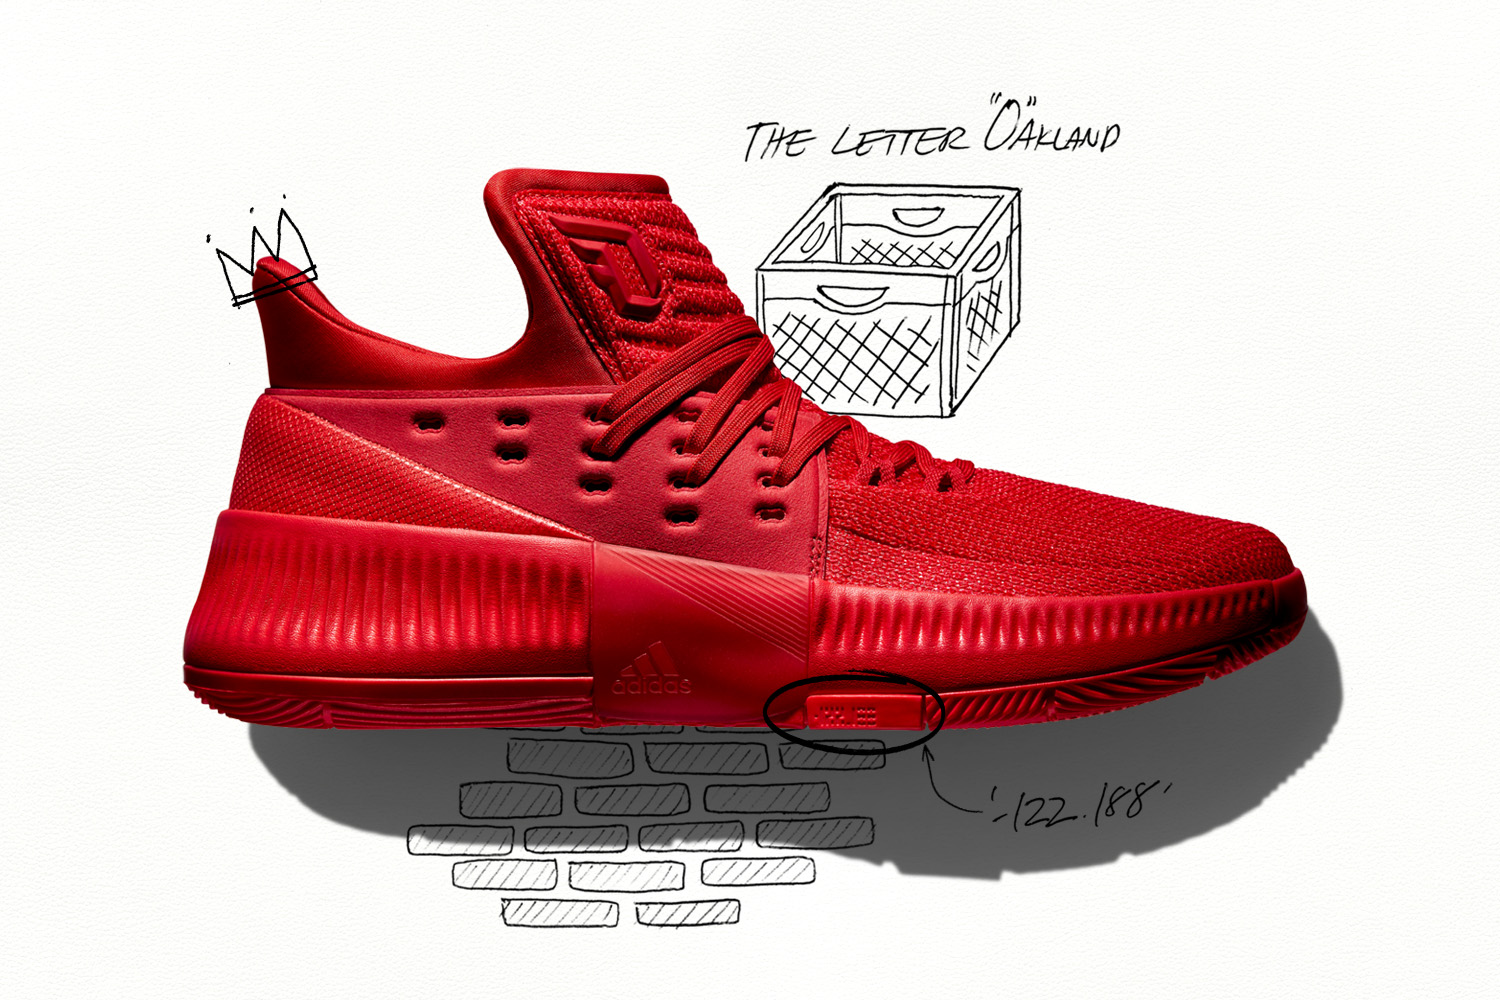 Dame 3 : Le grand test de la dernière sneaker adidas pour Damian Lillard